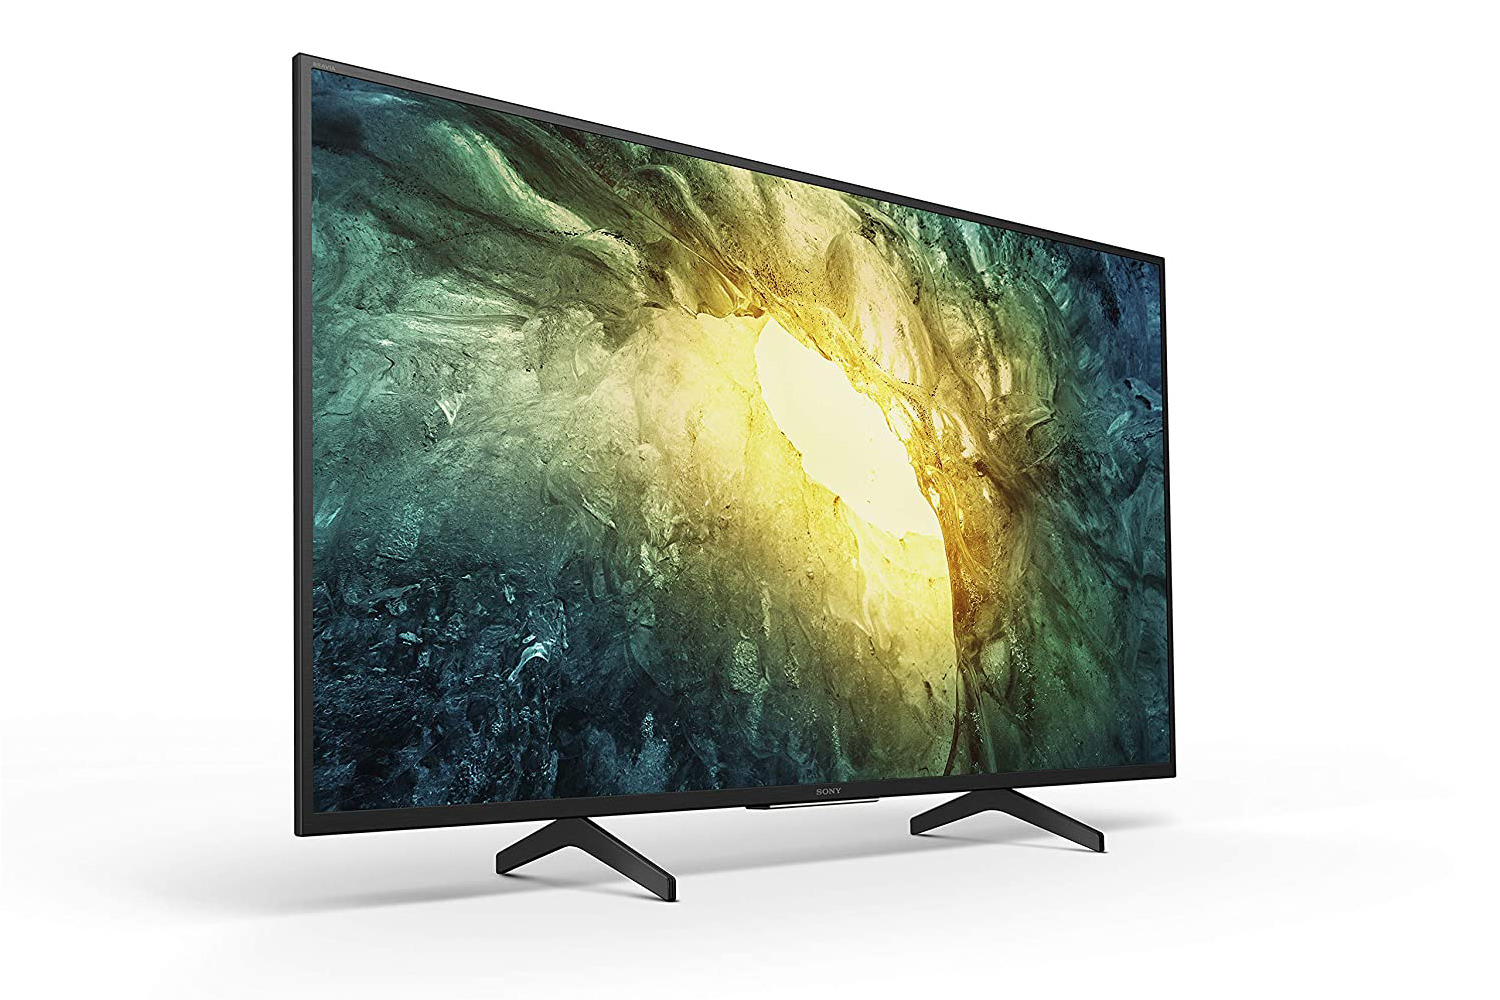 قیمت تلویزیون سونی X7577H مدل 55 اینچ + مشخصات